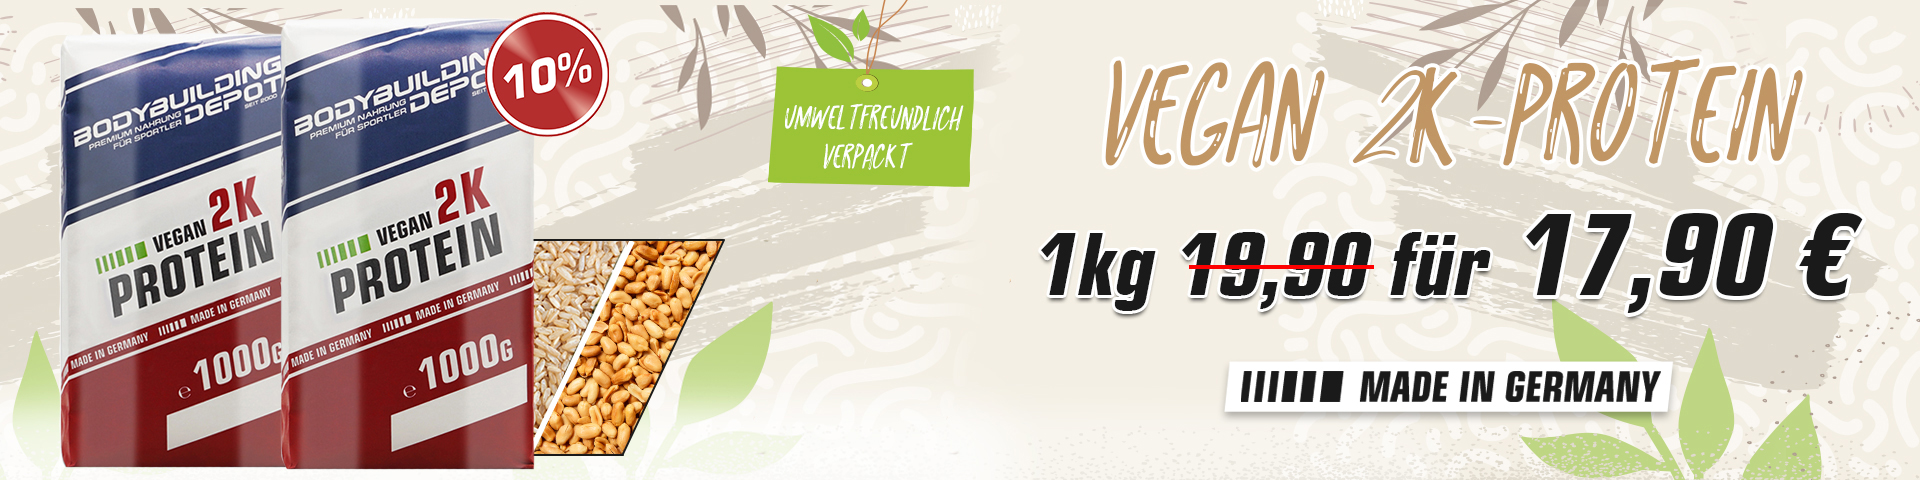 vegan-2k-protein.jpg